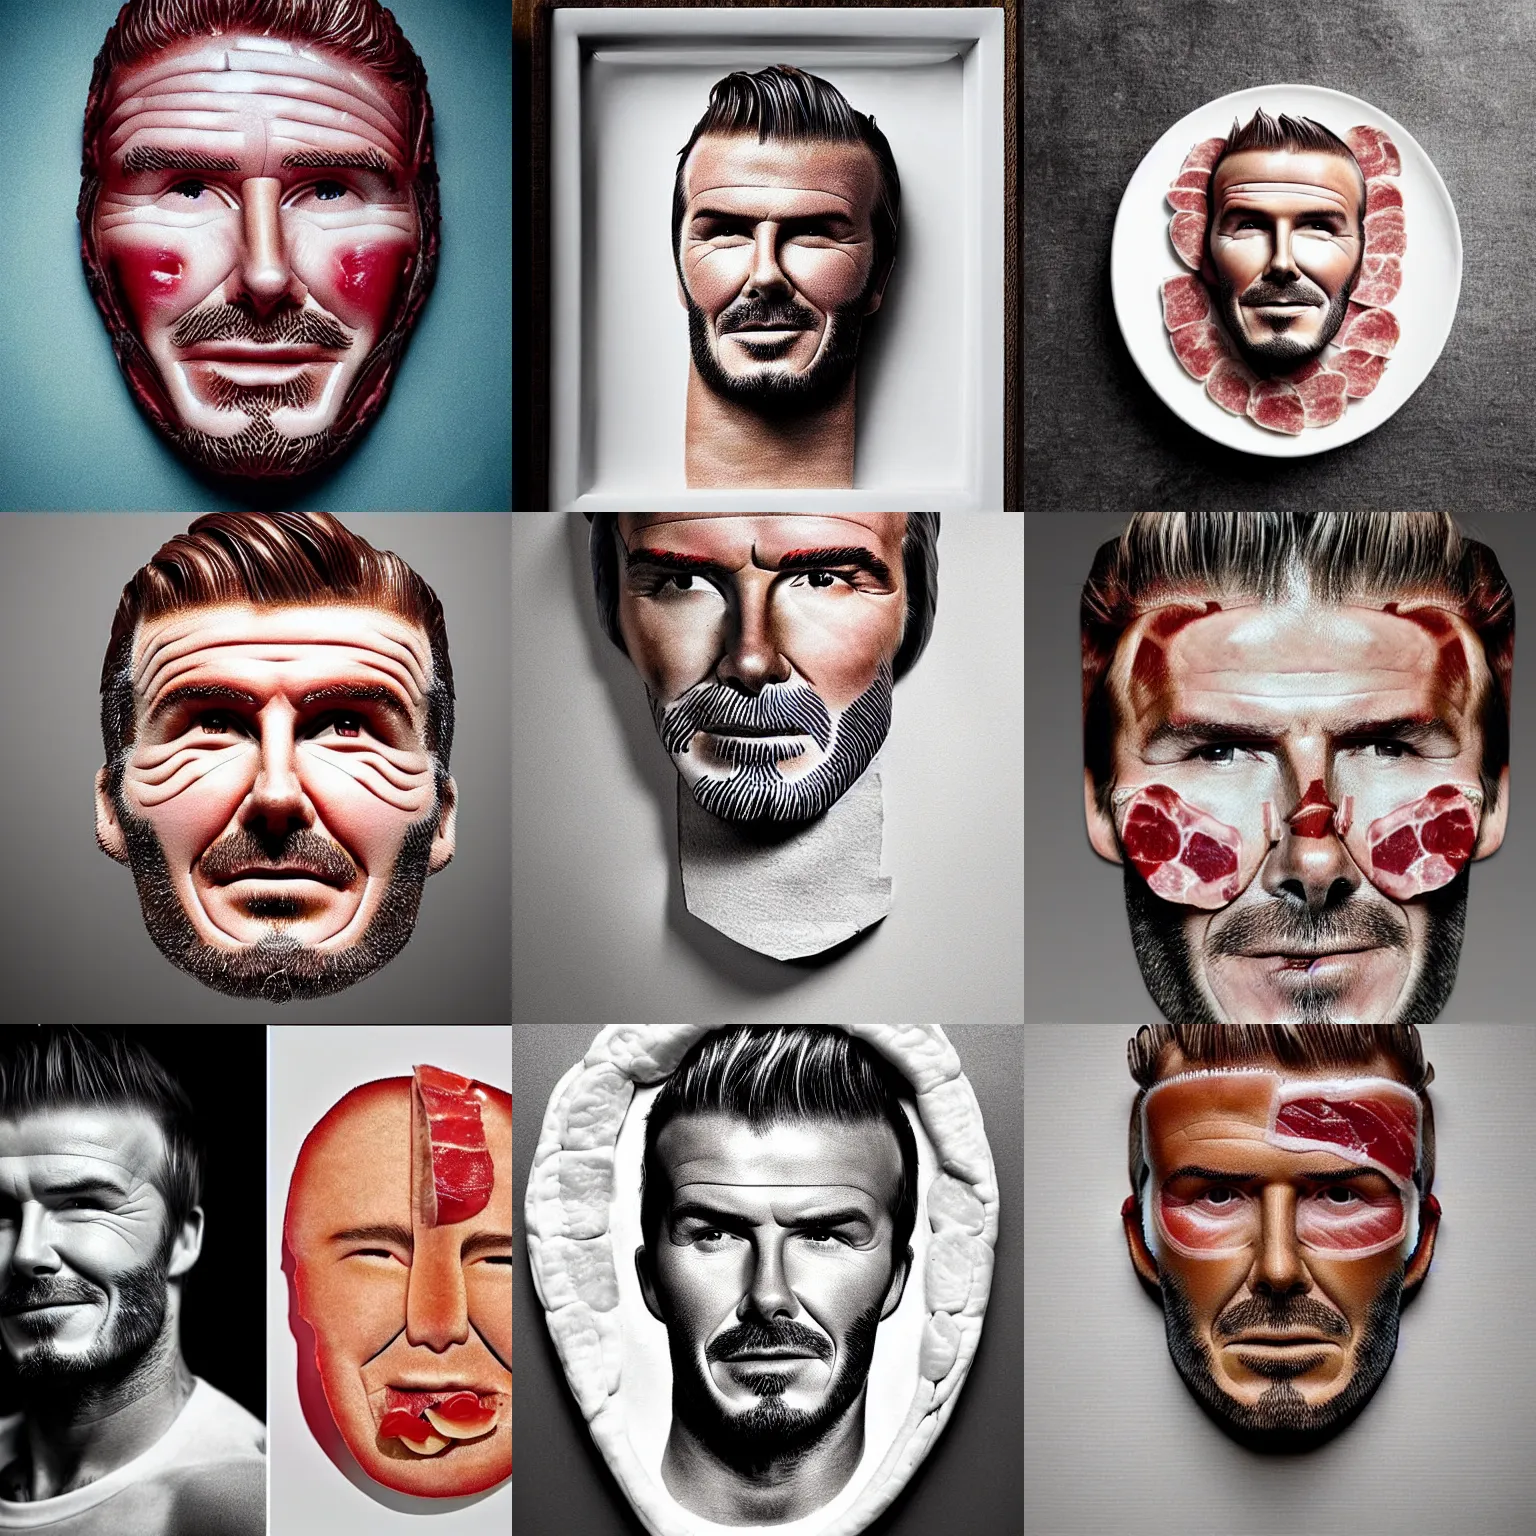 David Beckham statue that 'looks like Gordon Ramsay' prompts